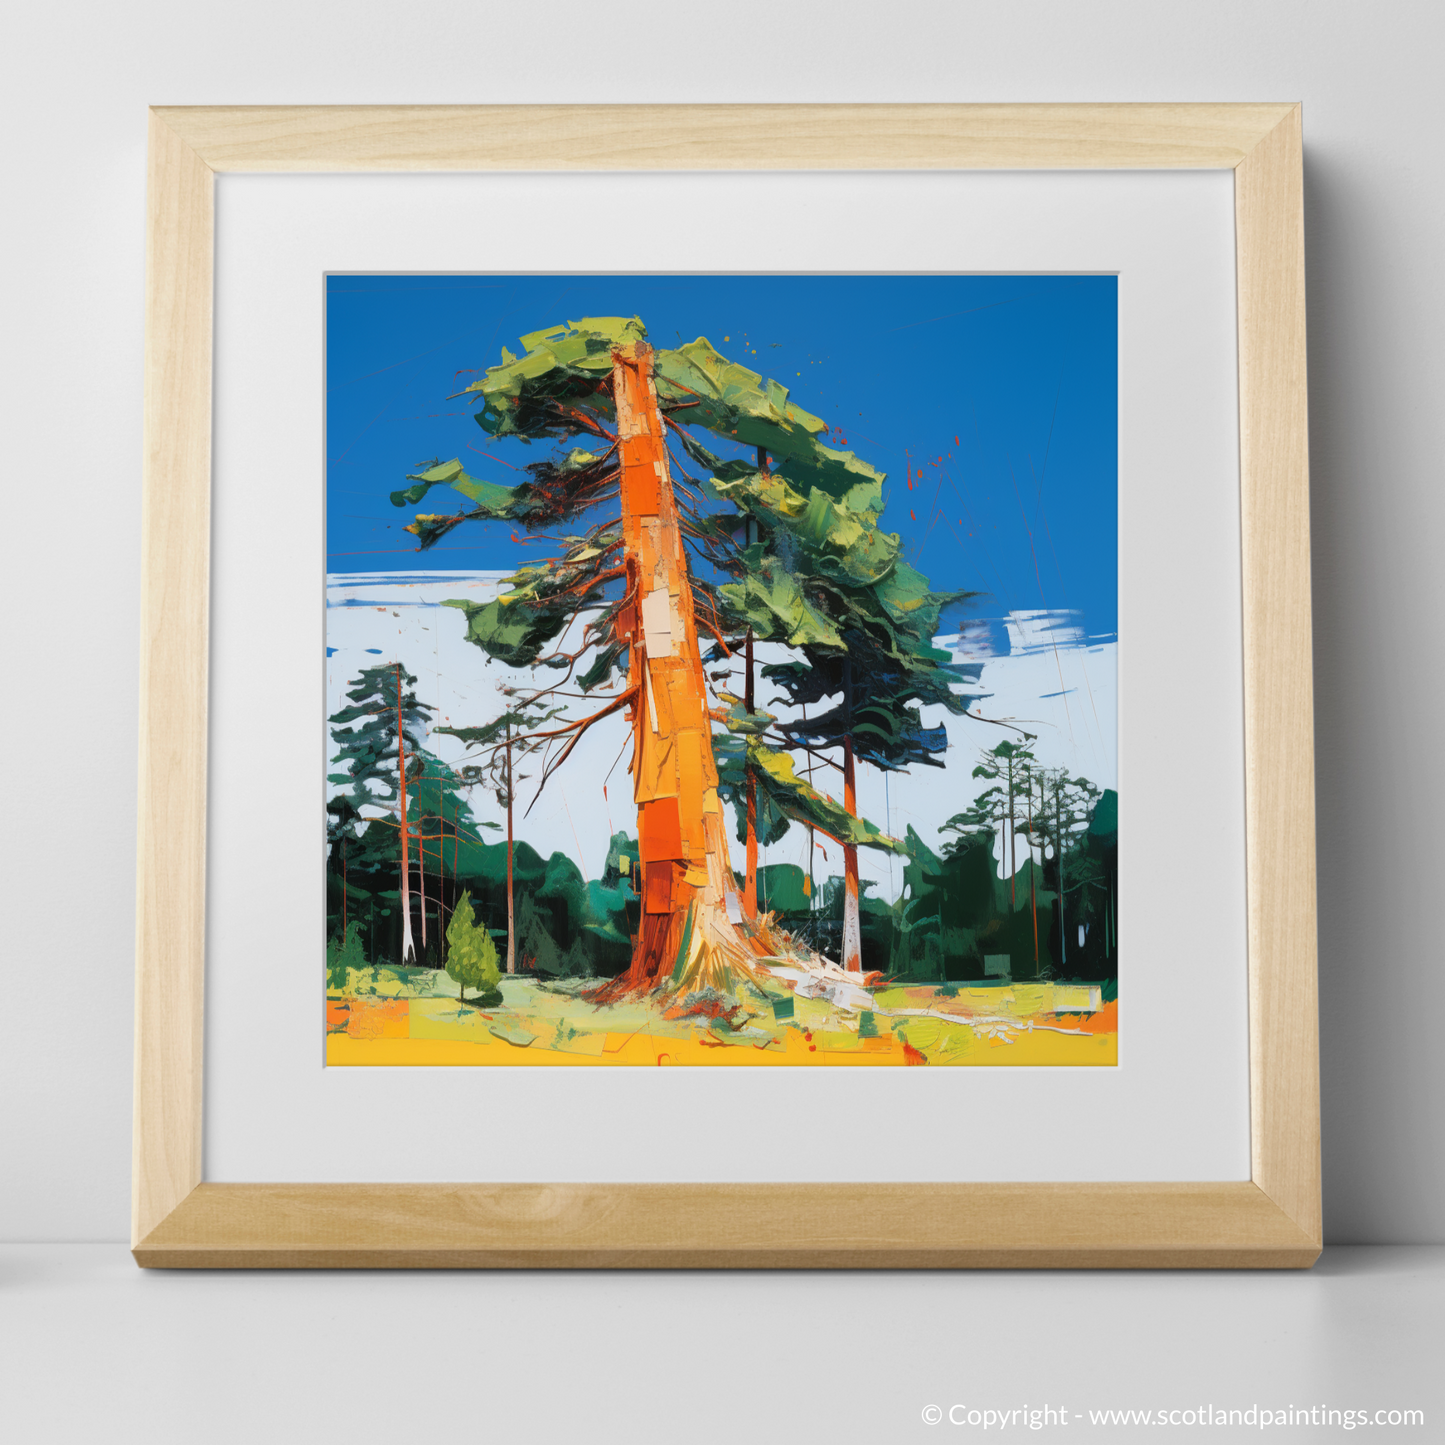 Vibrant Pines of Rothiemurchus: A Pop Art Tribute